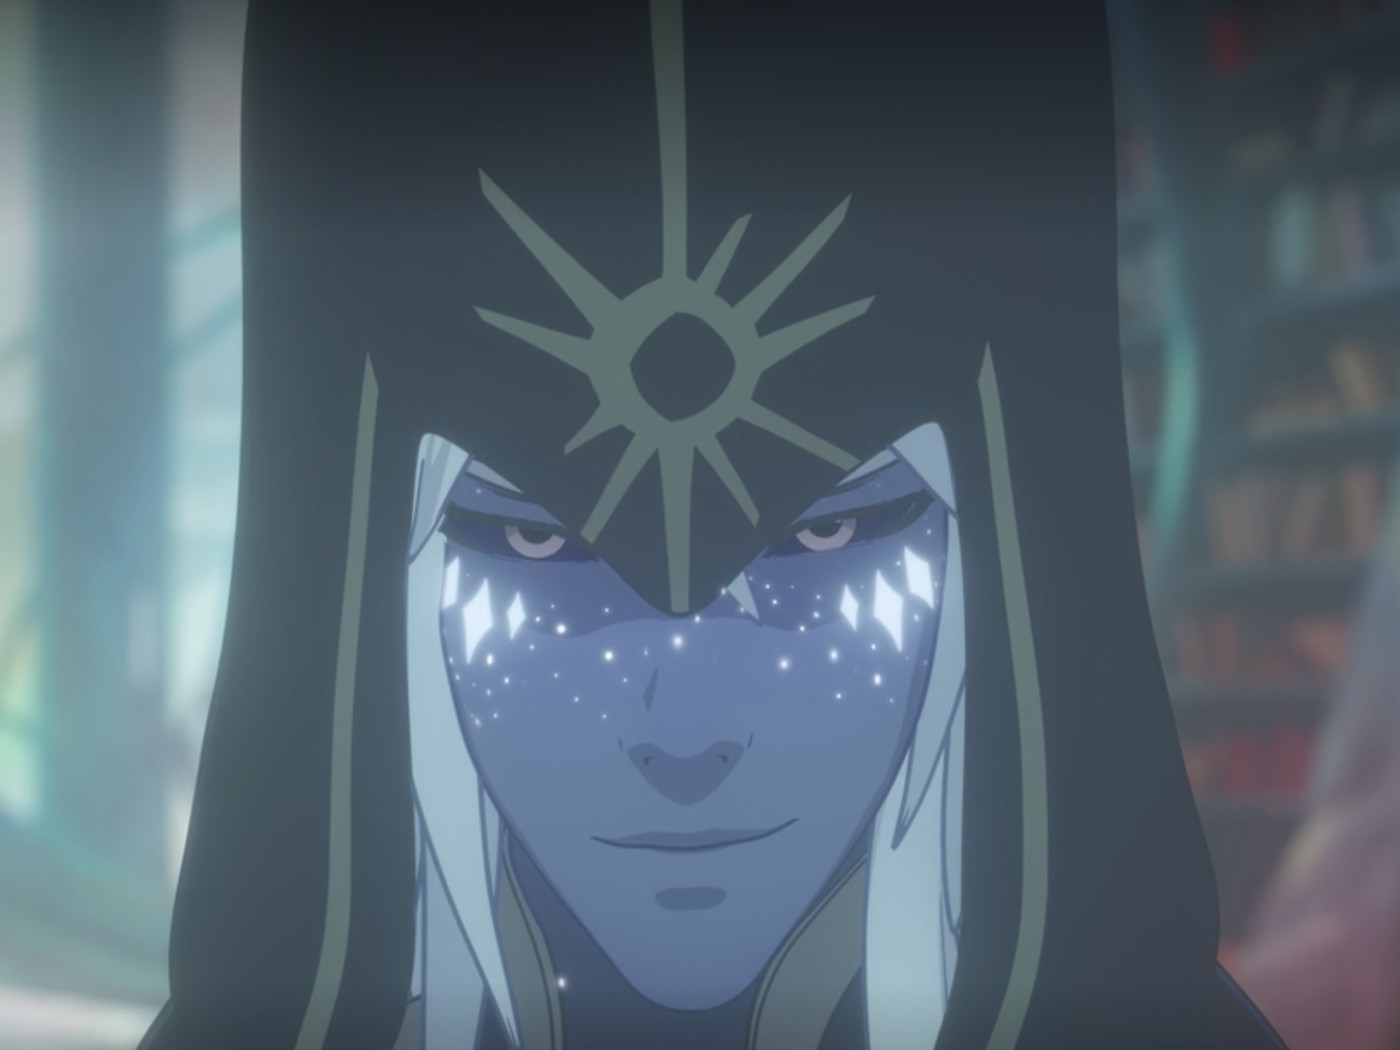 Dragon Prince's Aaravos and mirror's secrets were planted in season 1